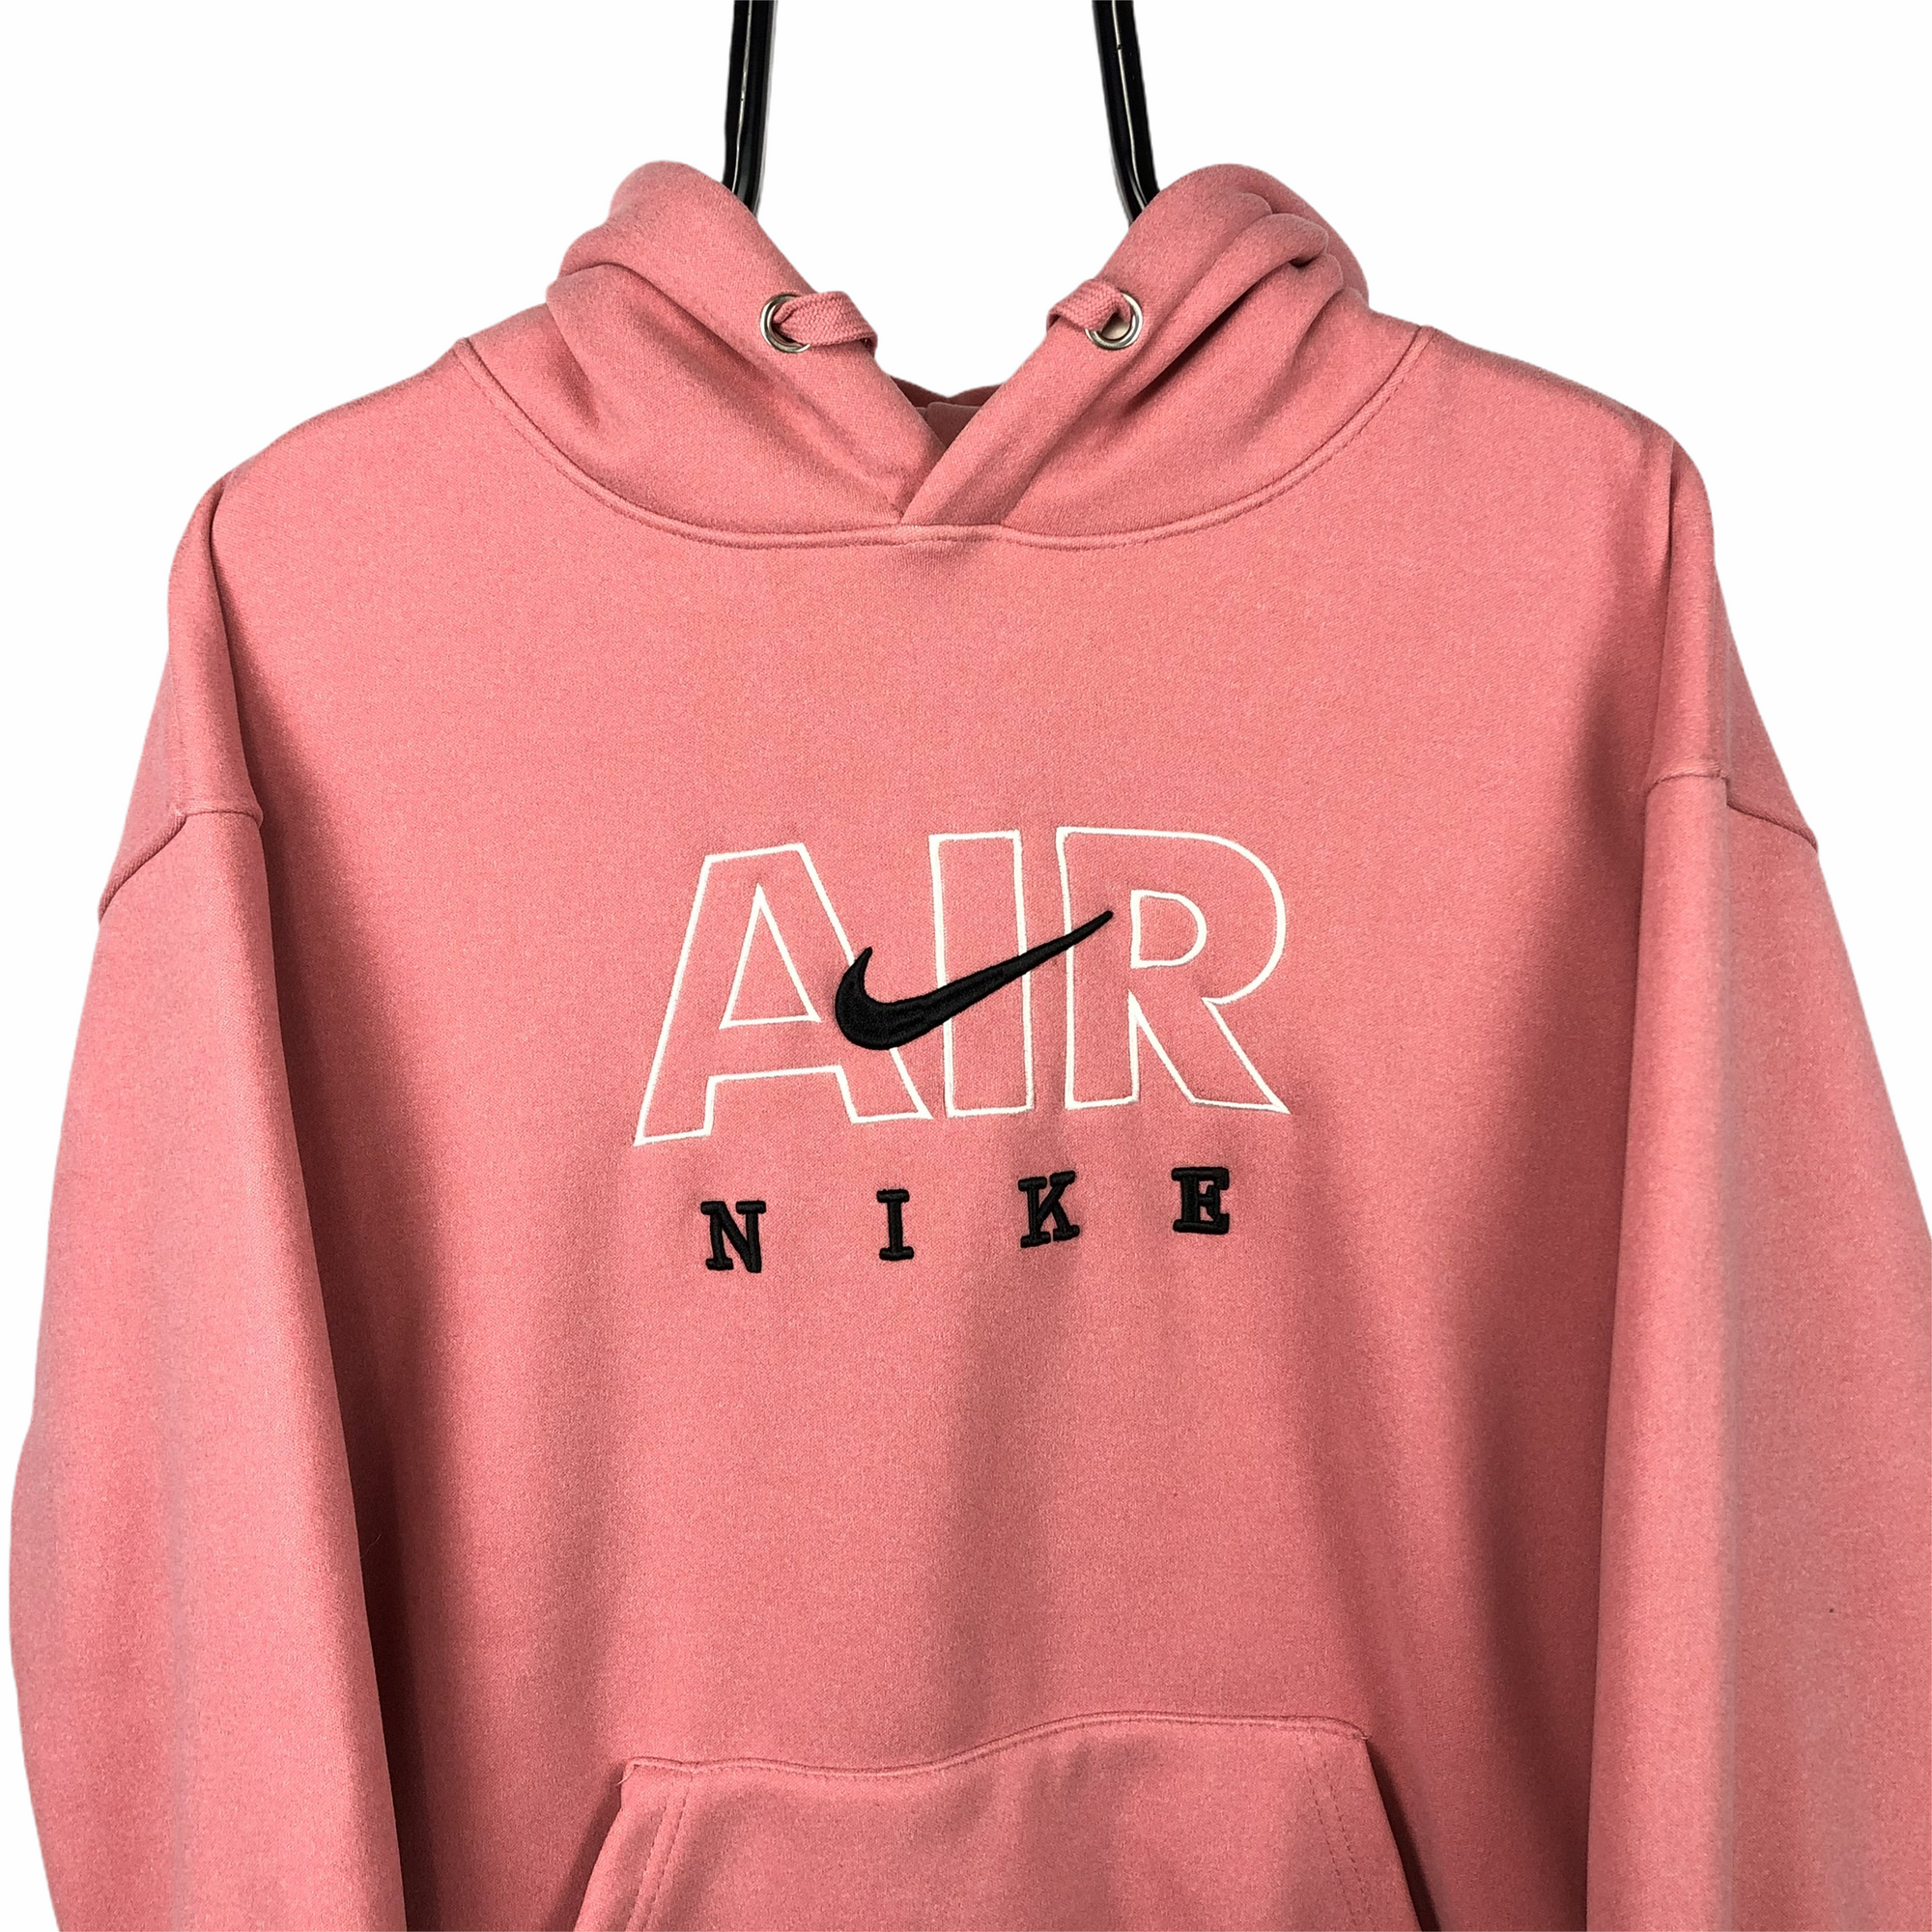 Nike Air Spellout Hoodie in Pink - Men's Small/Women's Medium